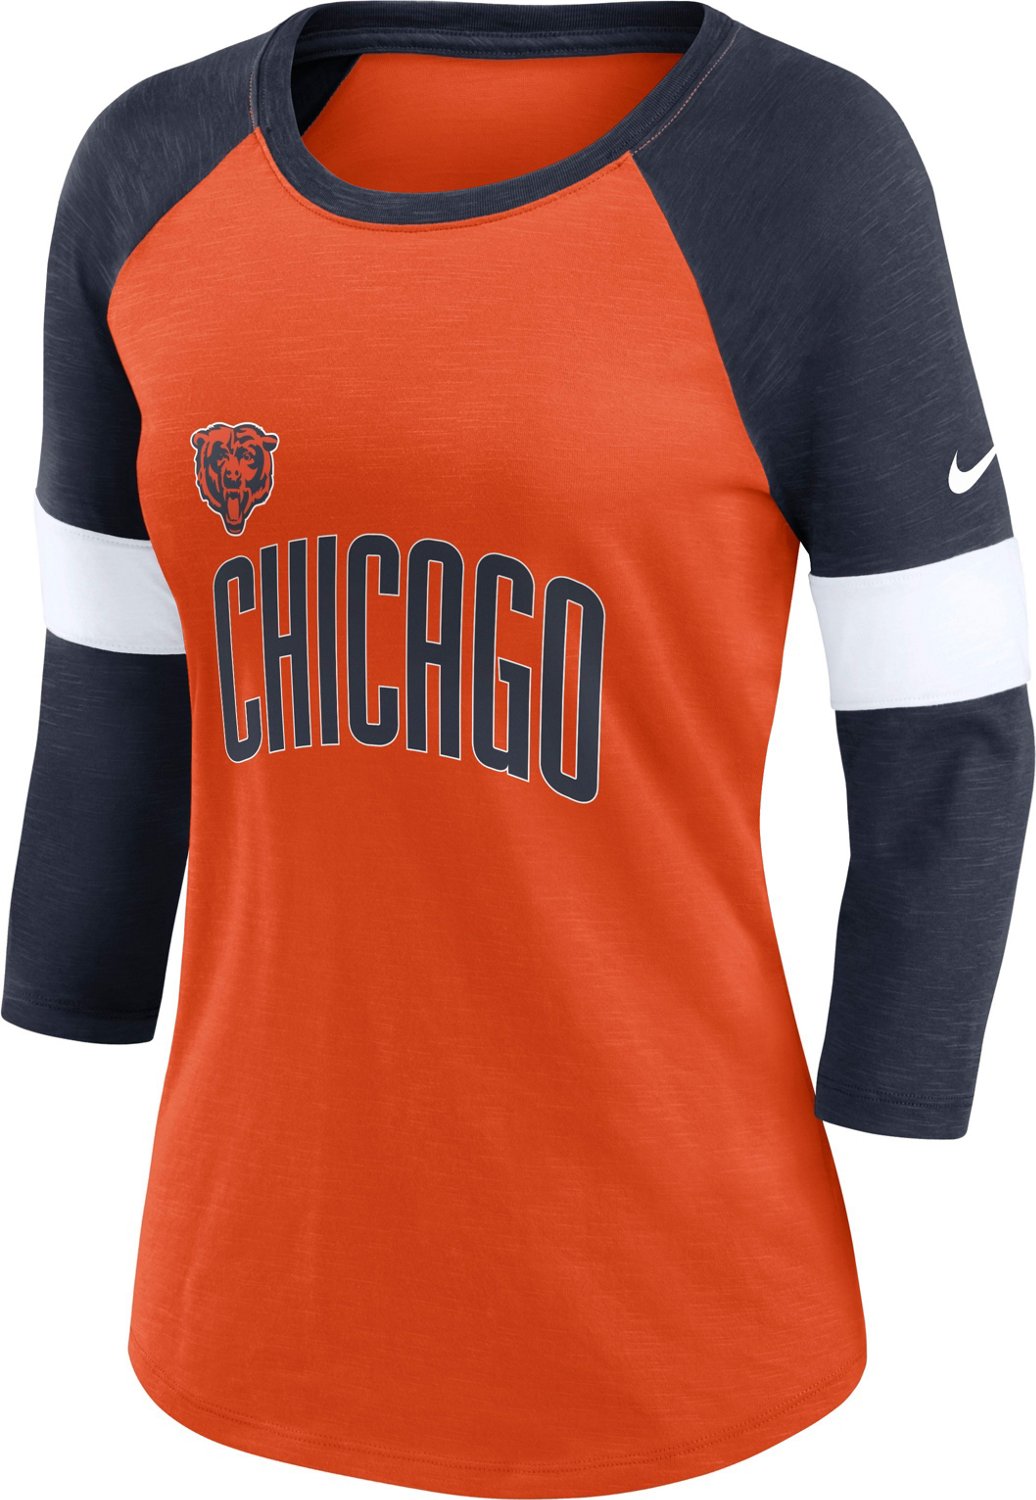 chicago bears 3 4 sleeve